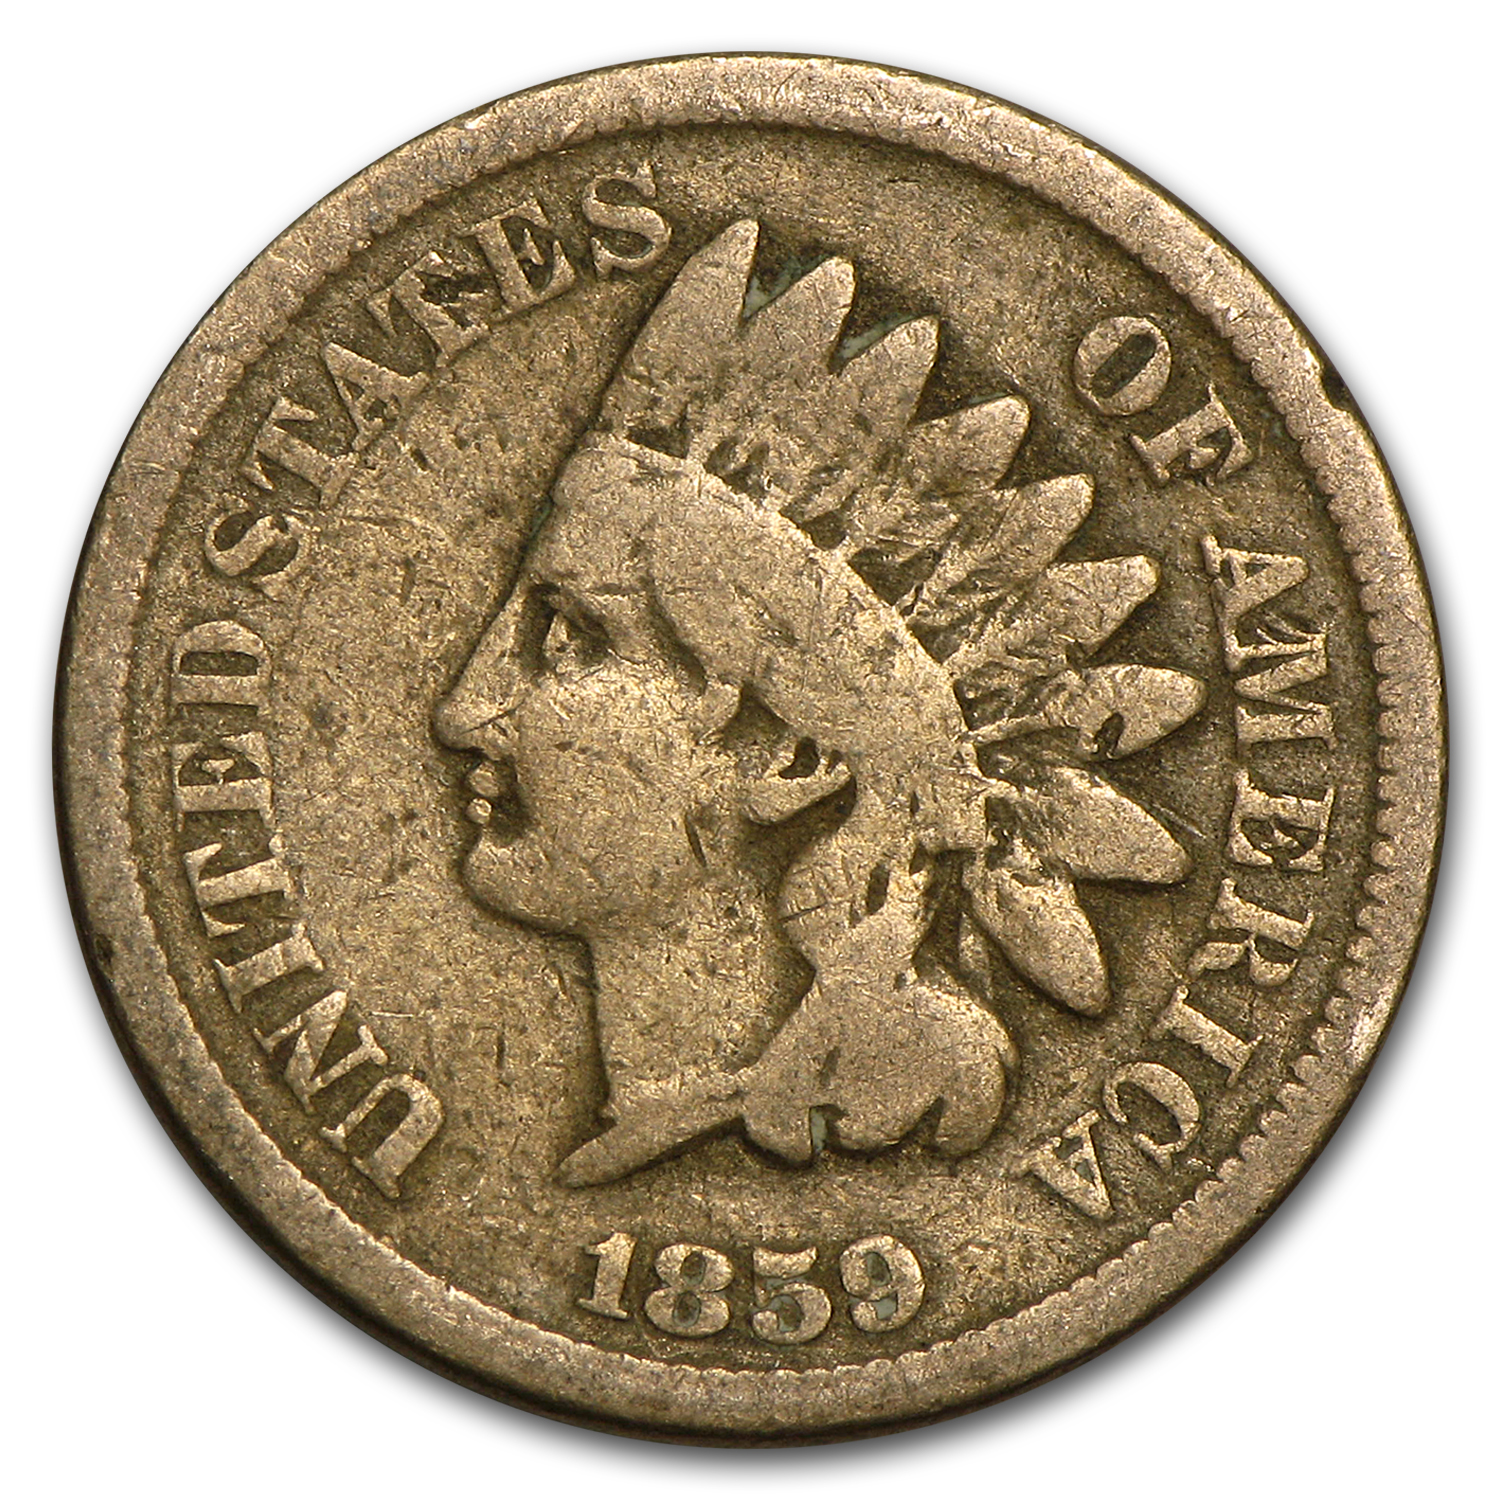 Buy 1859 Indian Head Cent Good